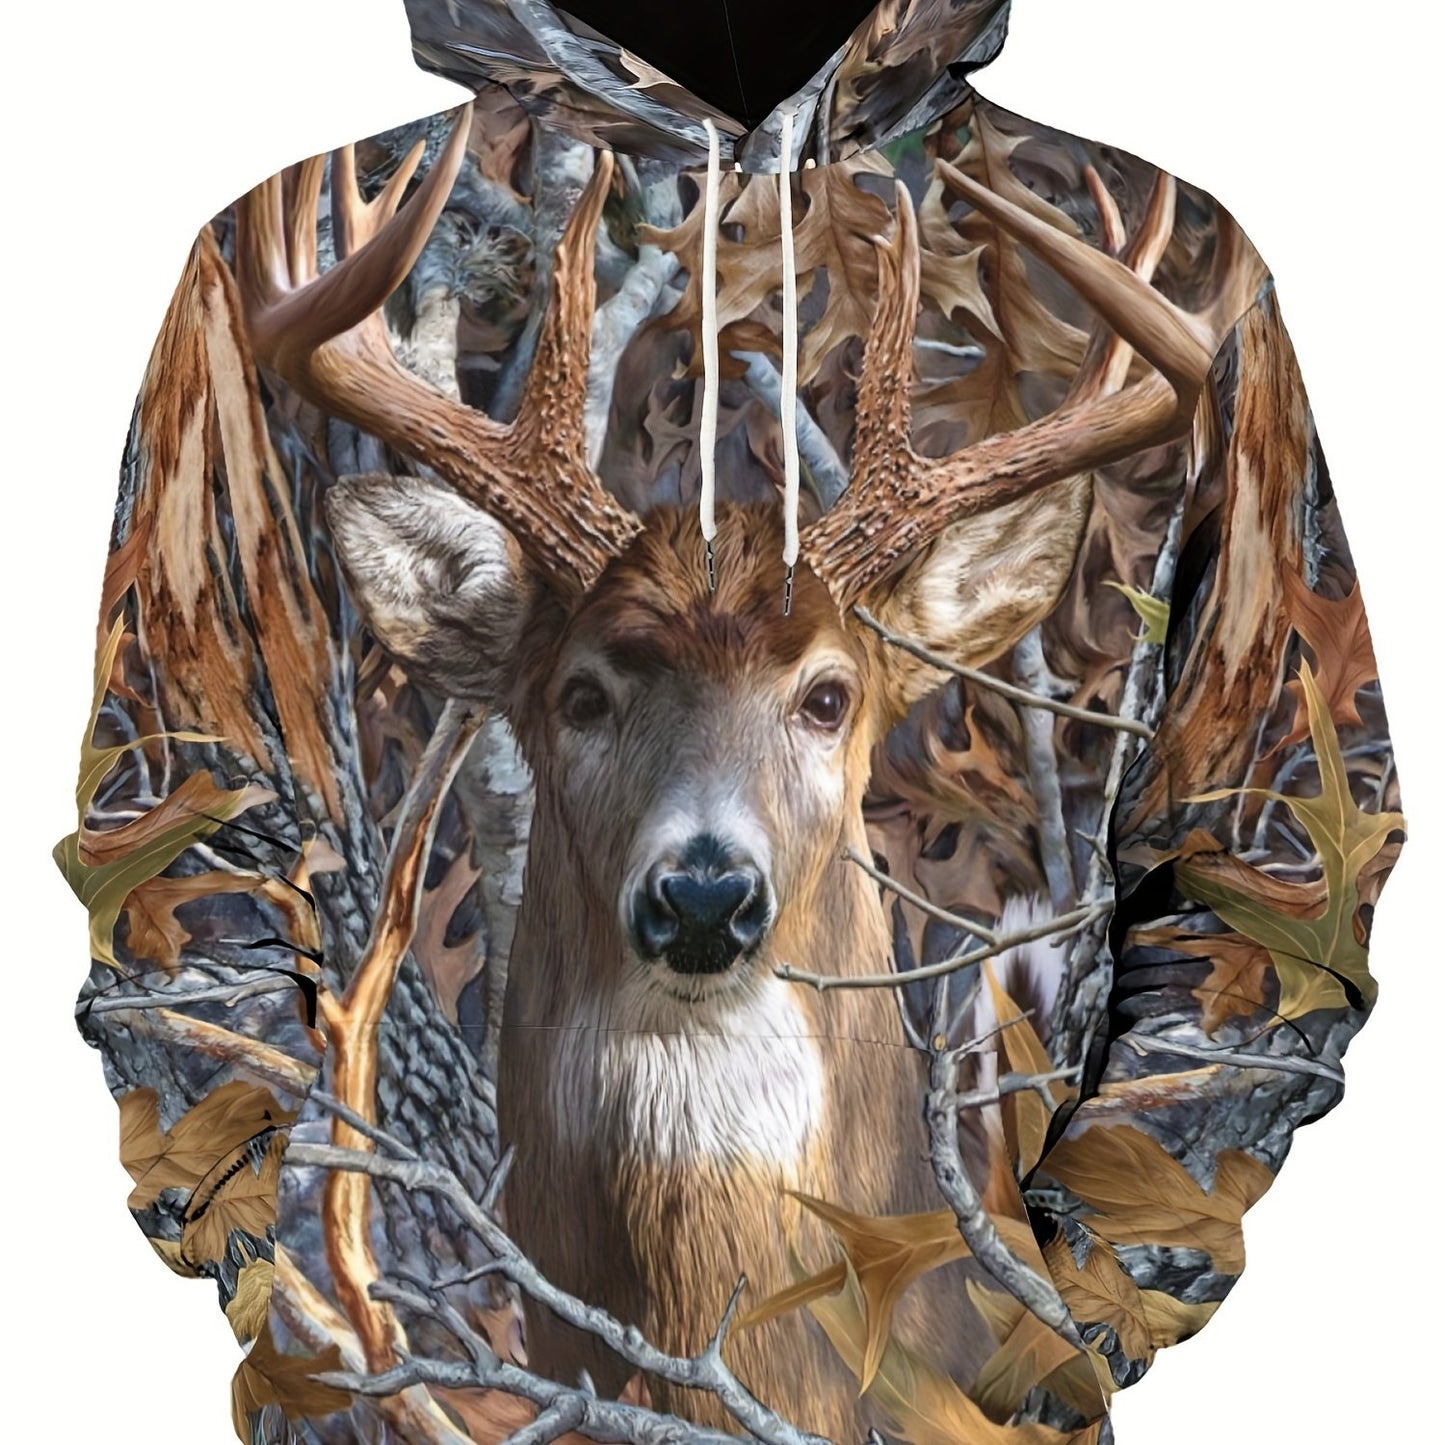 Deer & Leaf Print Hoodie, Cool Hoodies For Men, Men's Casual Graphic Design Pullover Hooded Sweatshirt With Kangaroo Pocket Streetwear For Winter Fall, As Gifts